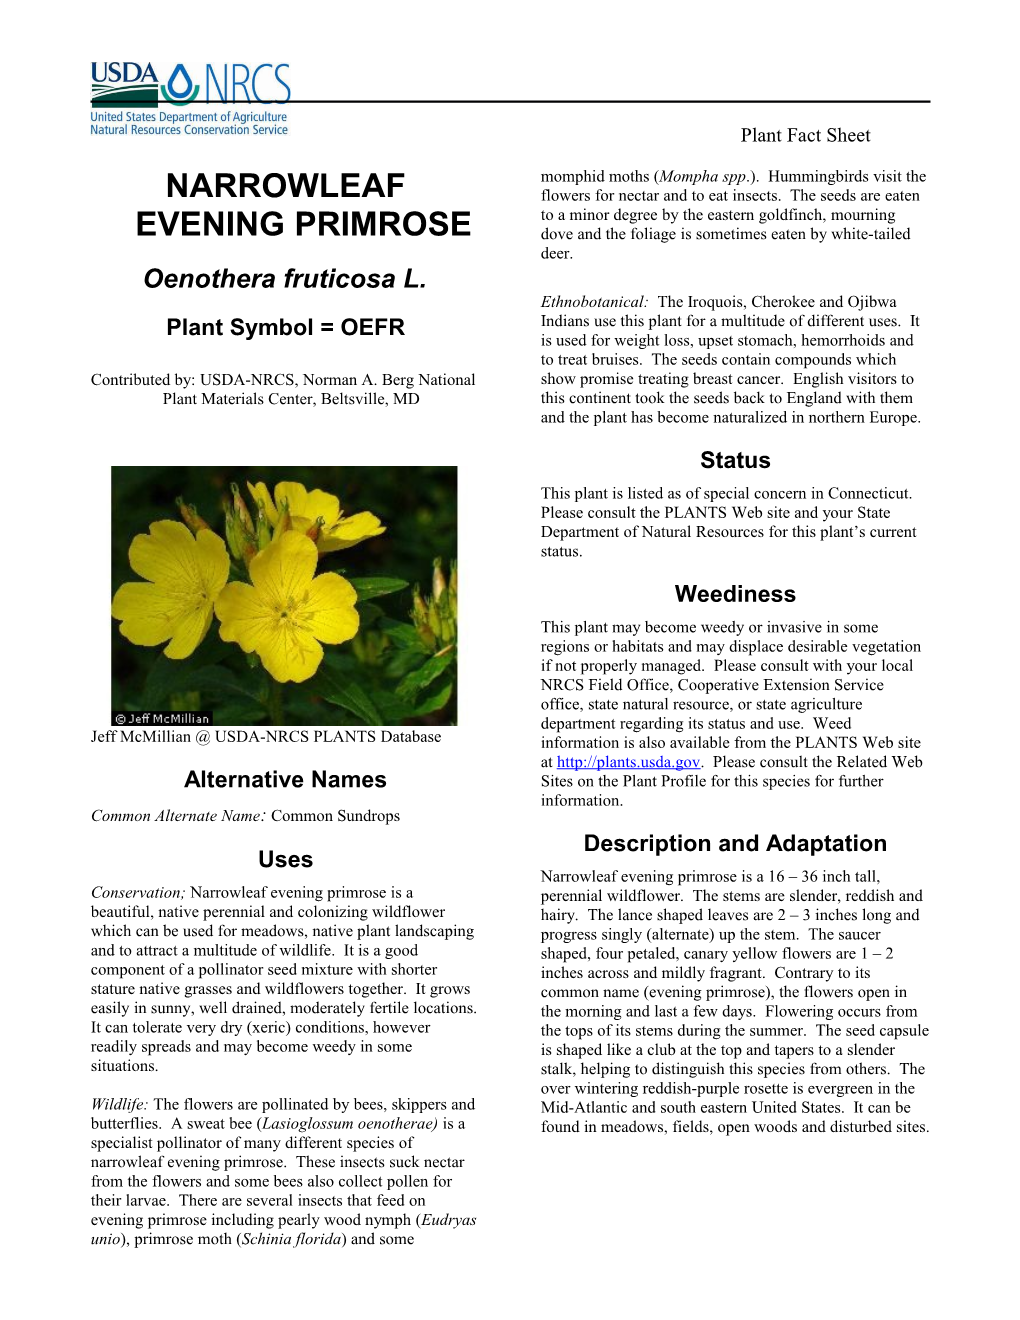 Narrowleaf Evening-Primrose Plant Fact Sheet